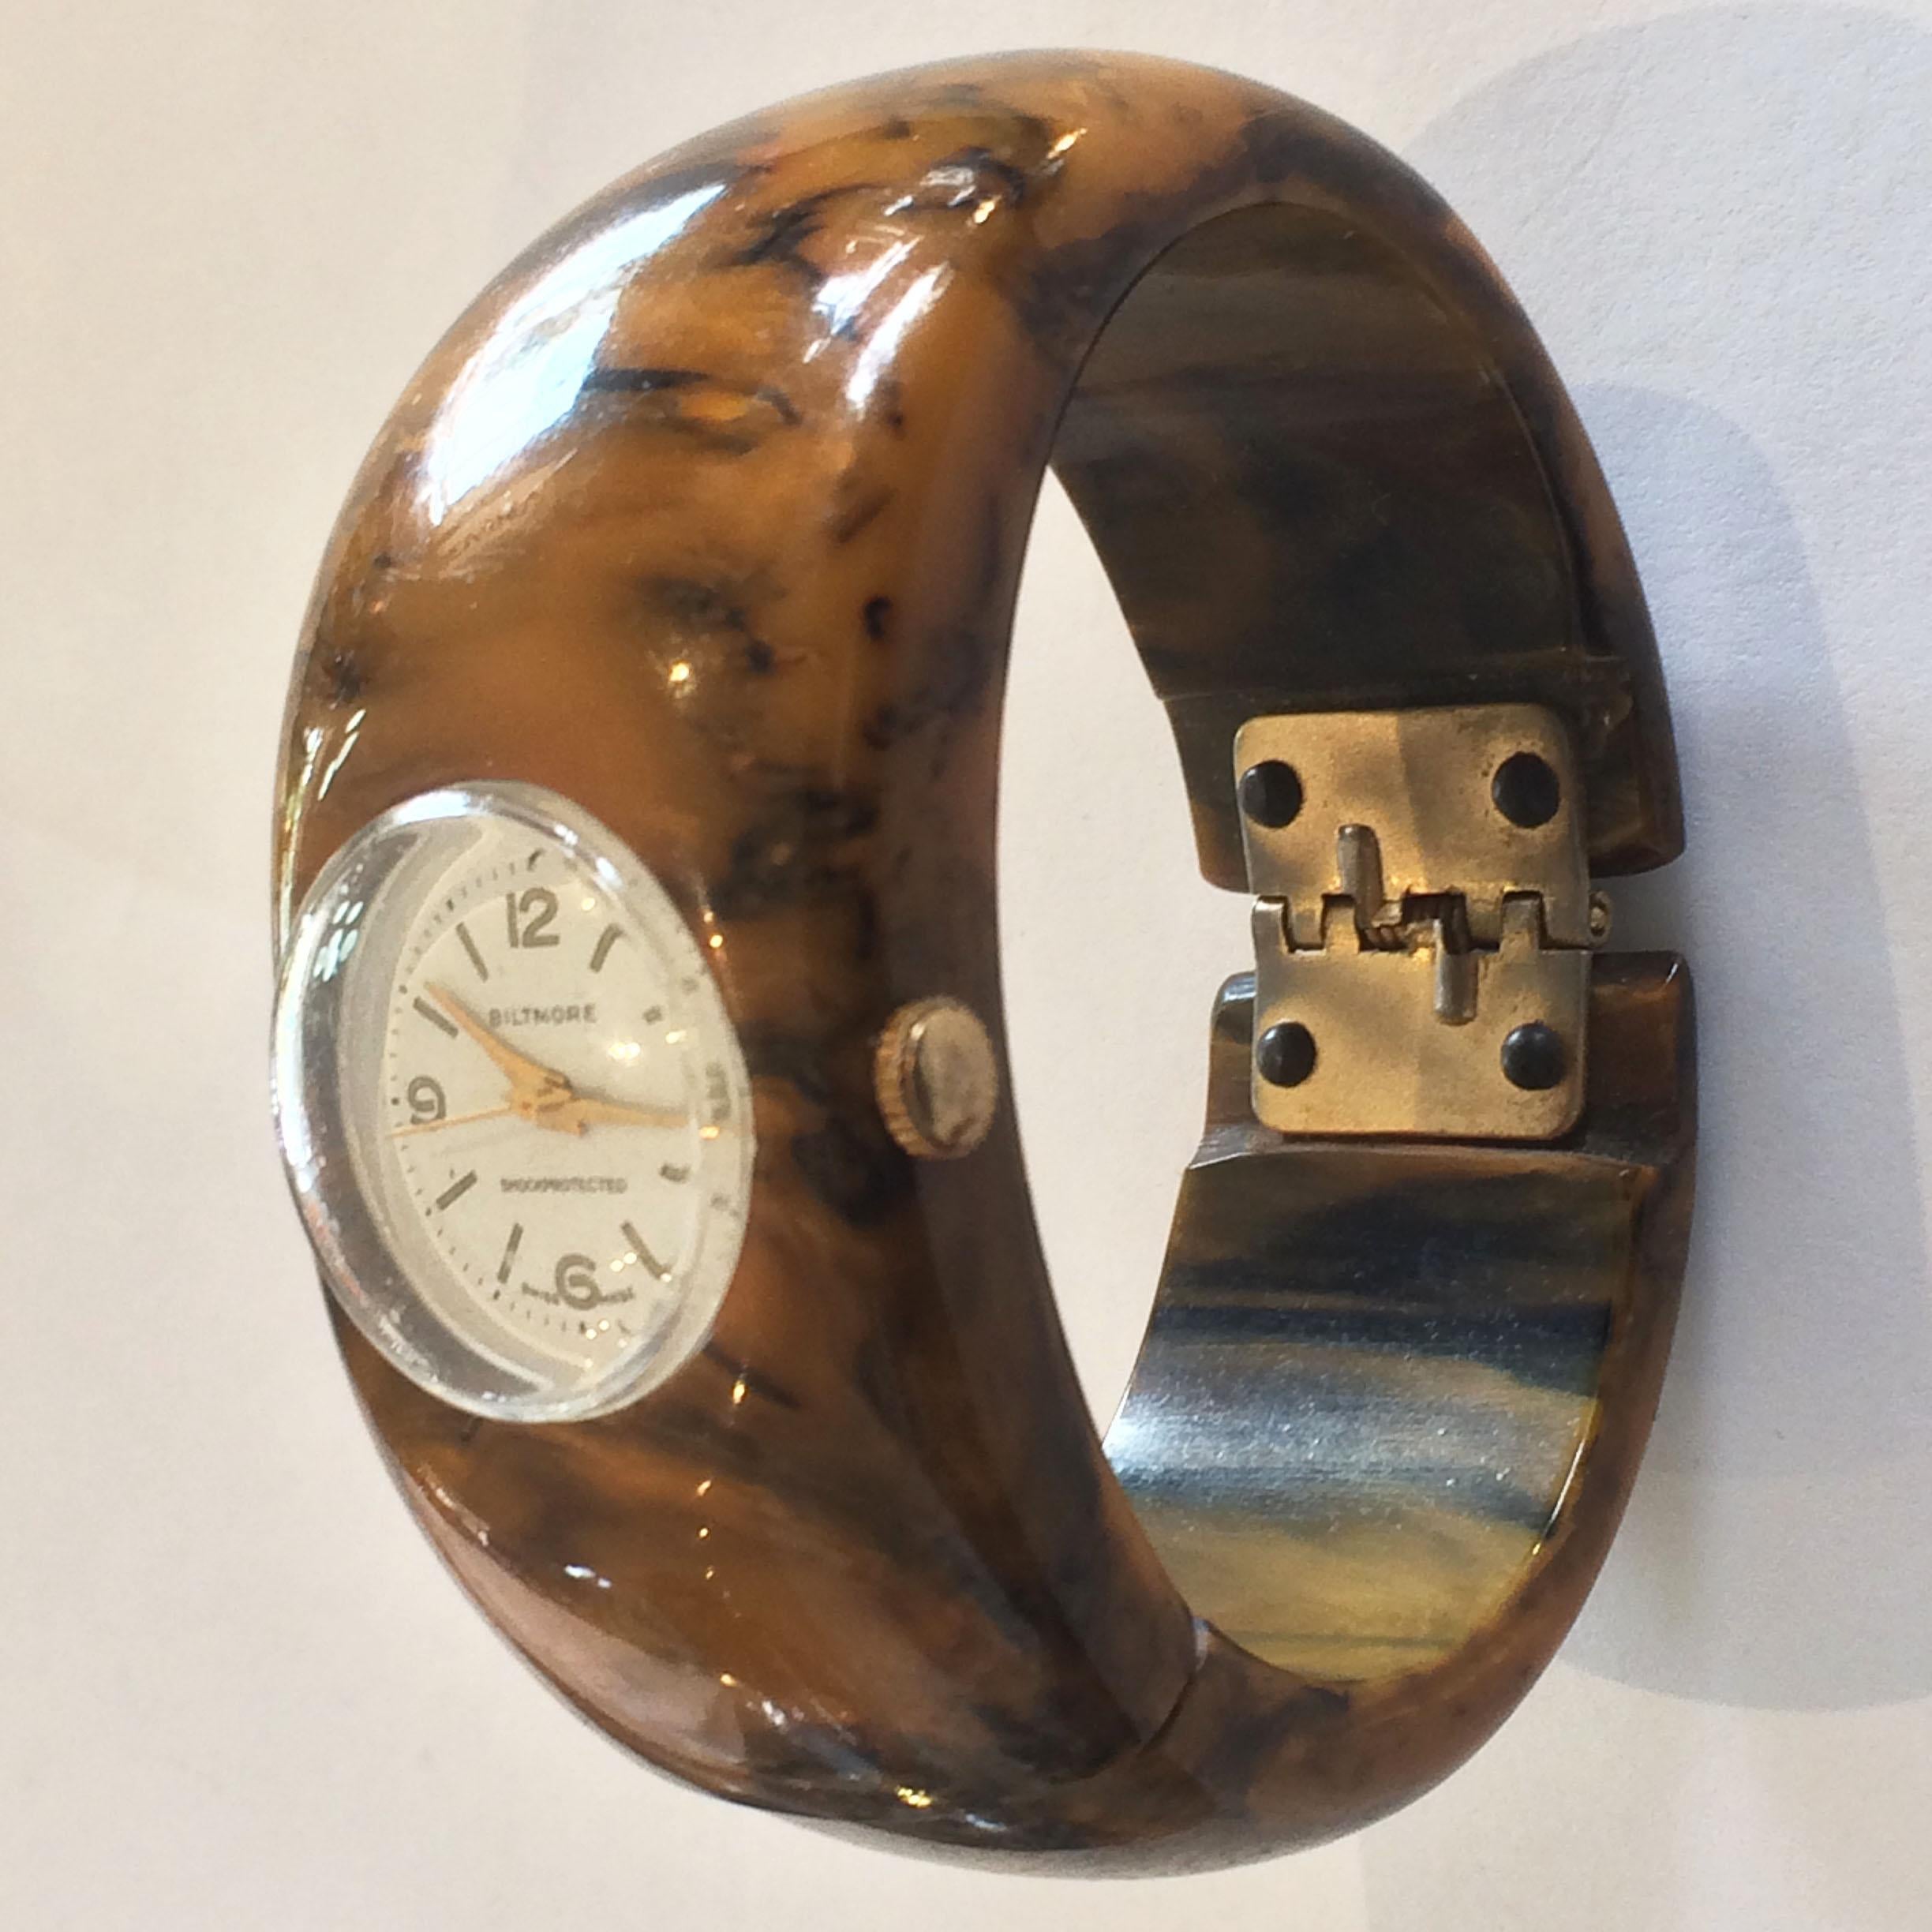 Art Deco Bakelite Watch by Biltmore in Mississippi Mud hinged clamper 1